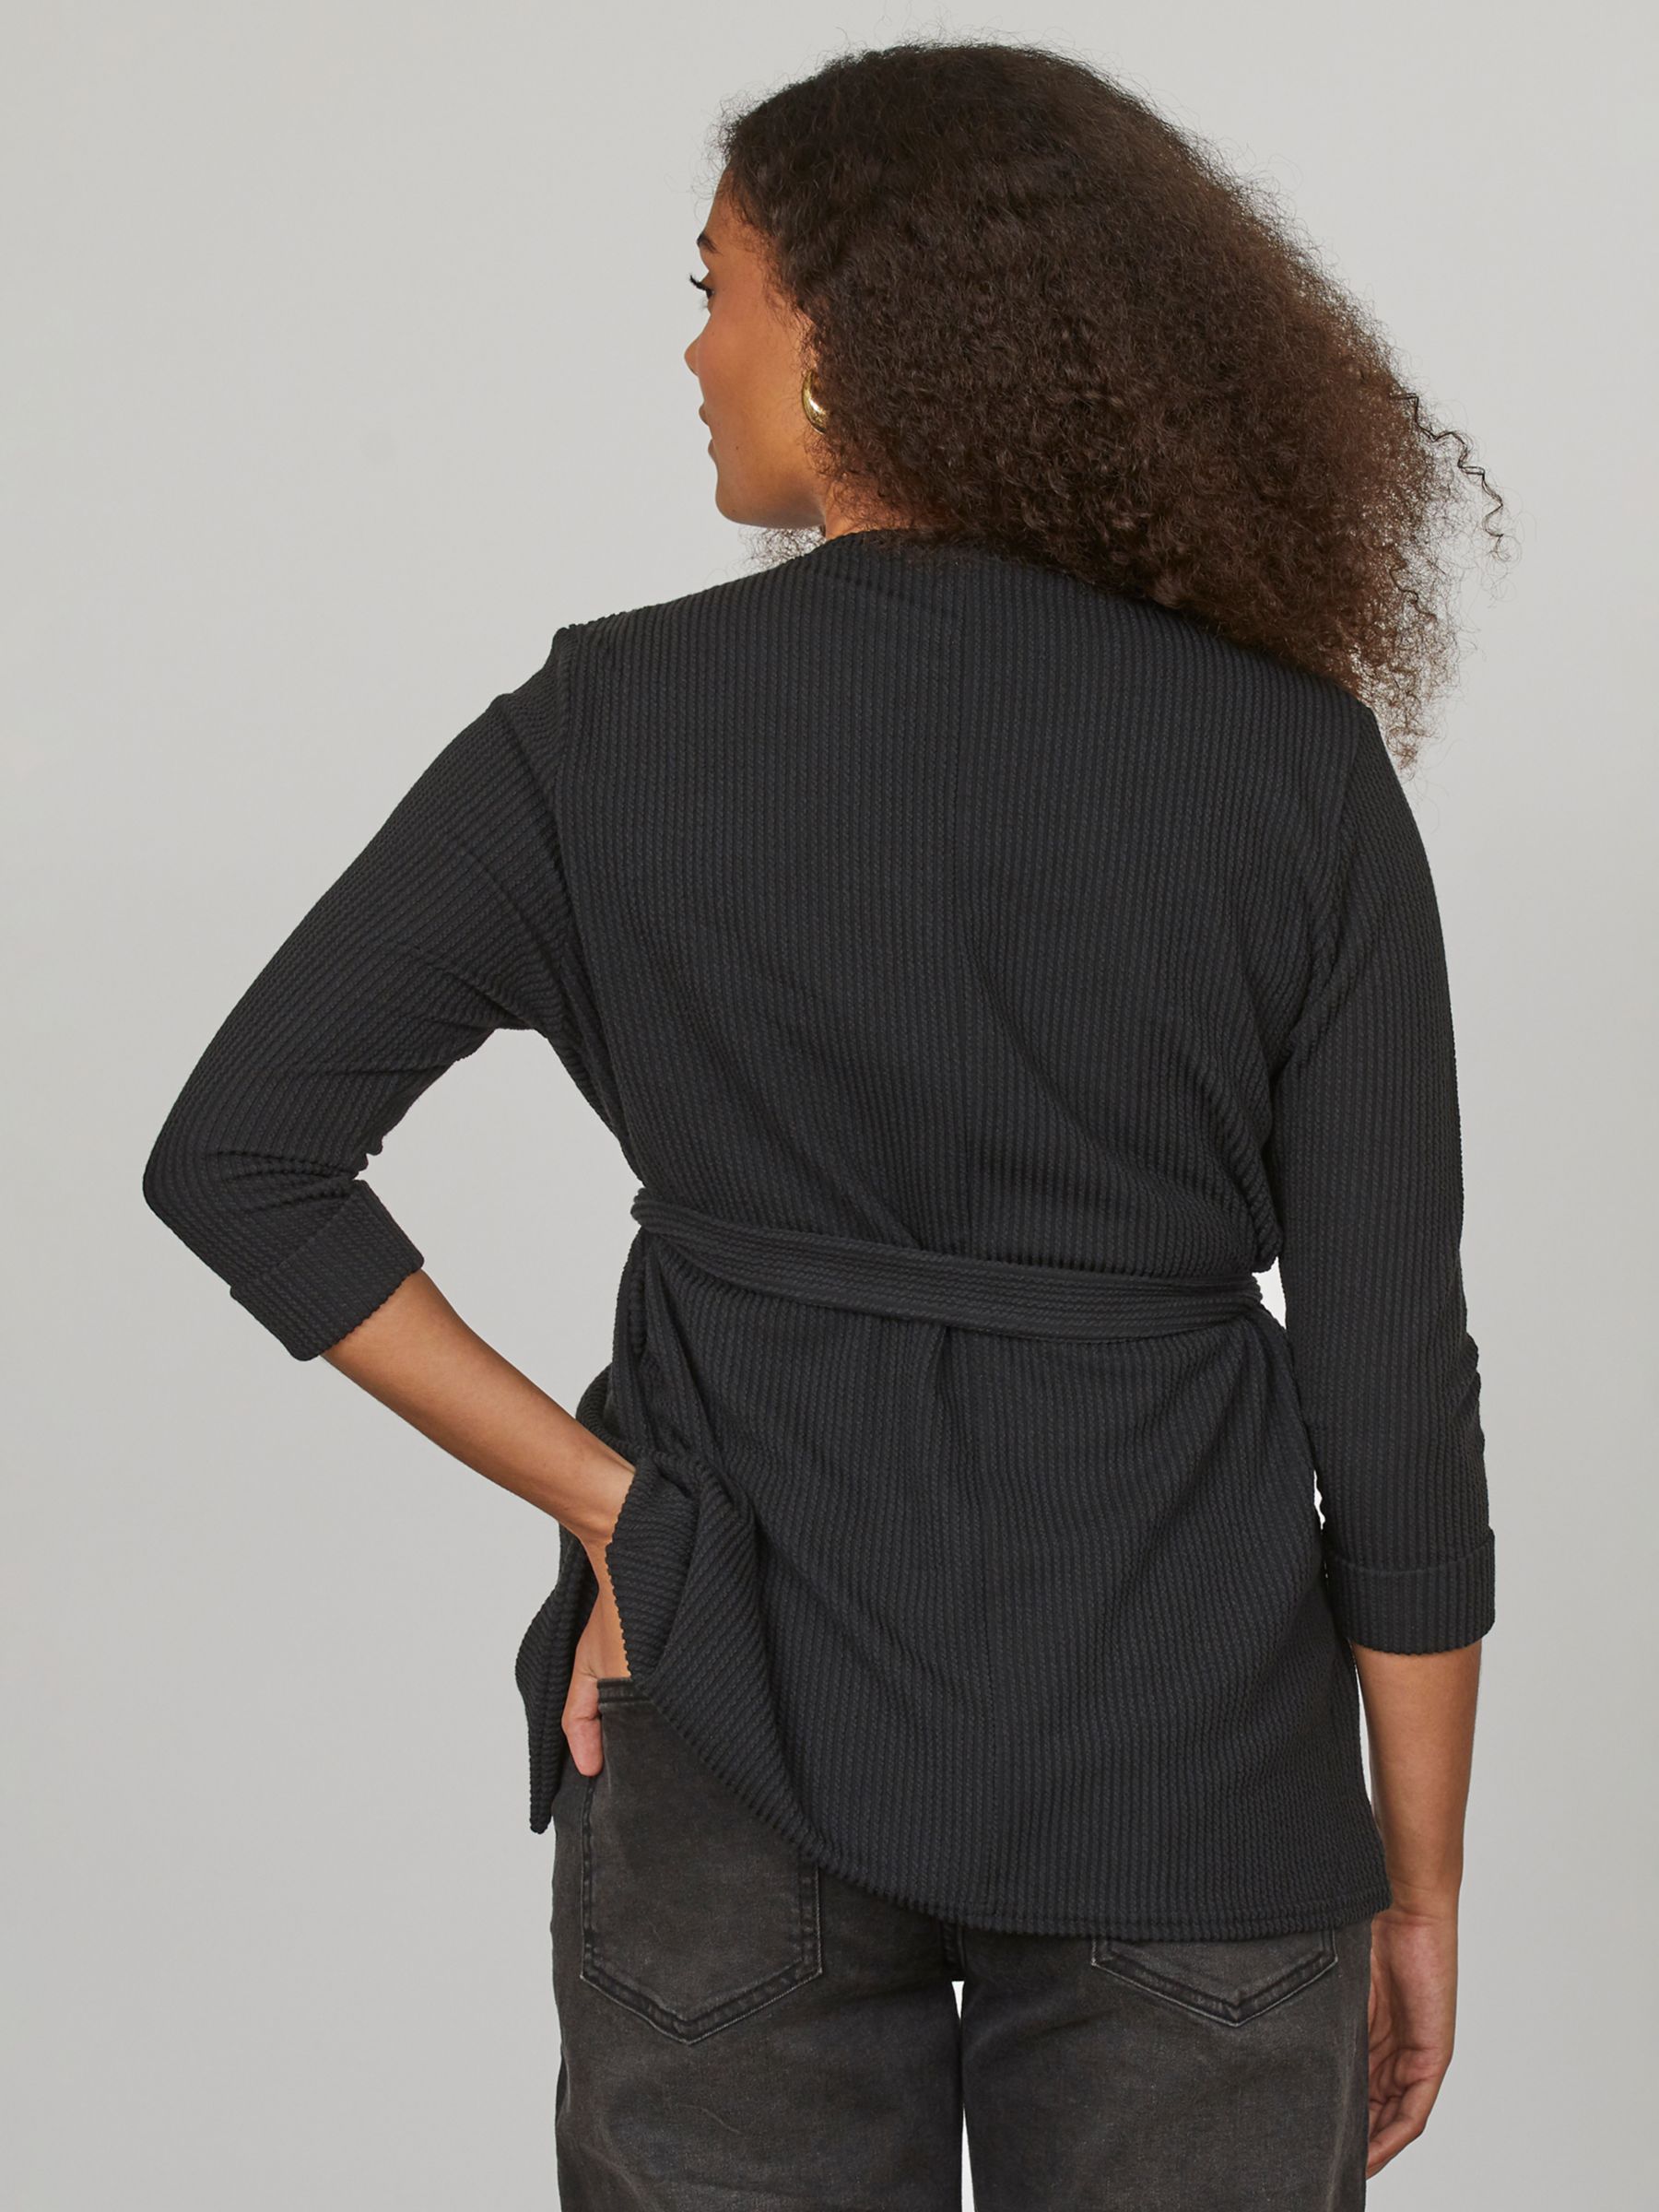 Buy Sisters Point Caddy Tie Wrap Jacket, Black Online at johnlewis.com